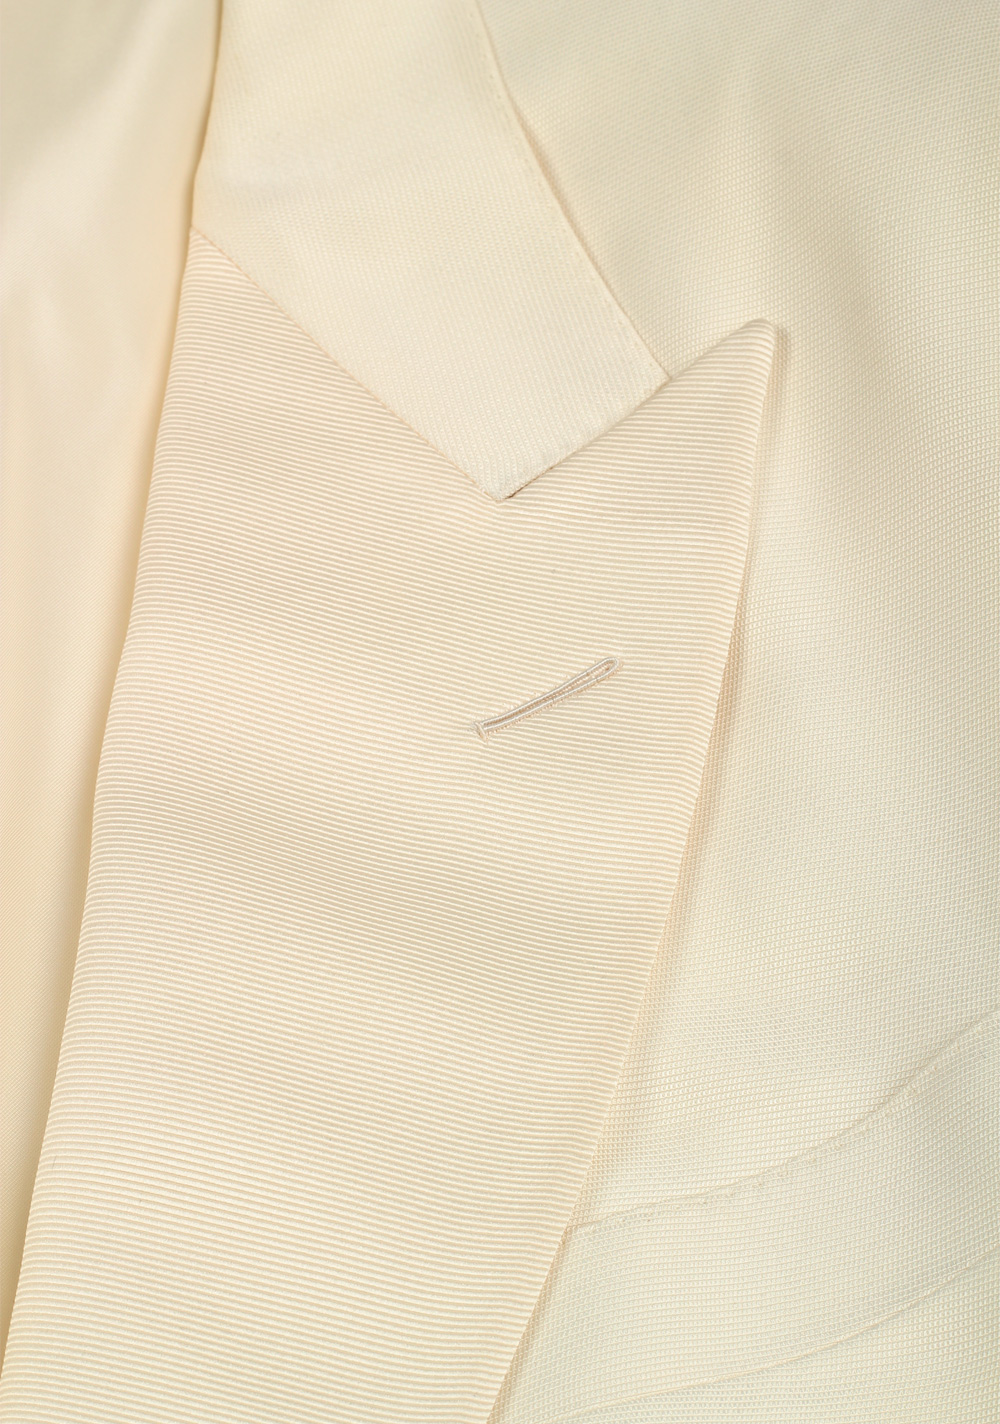 TOM FORD Windsor James Bond Spectre Tuxedo Dinner Jacket Size 58 / 48R U.S. | Costume Limité